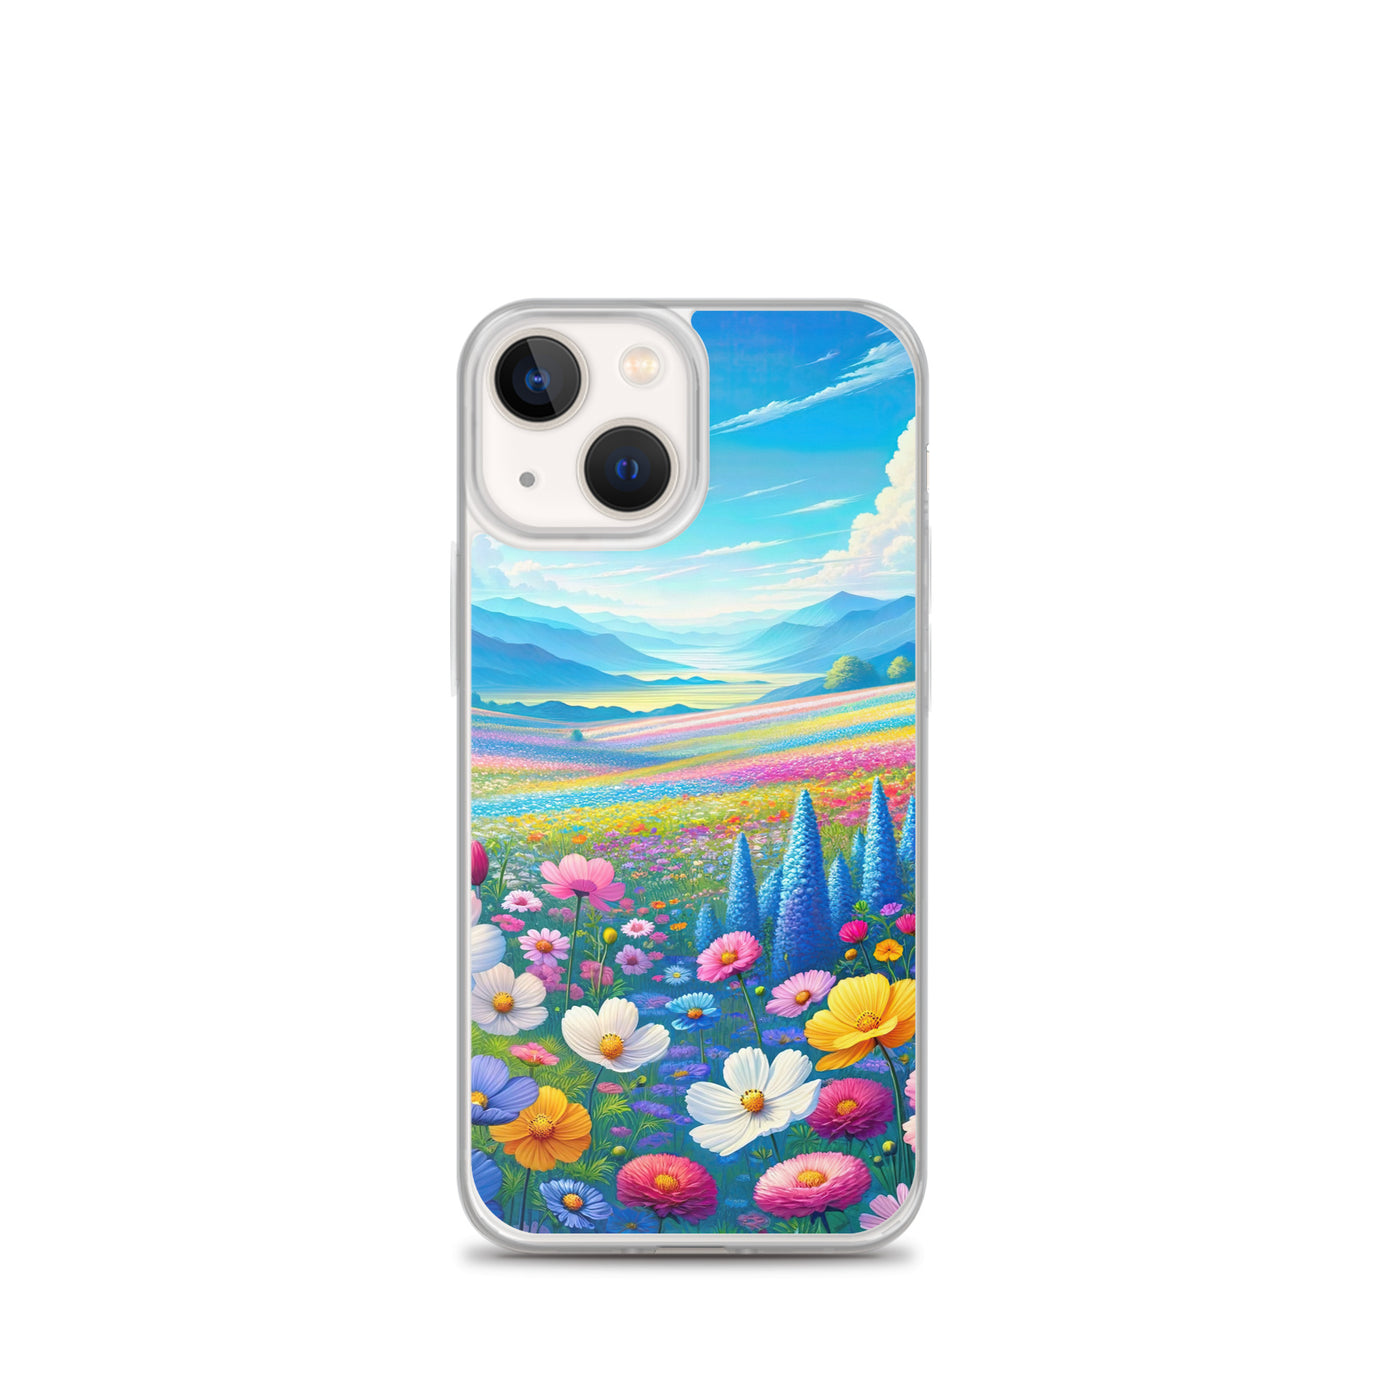 Weitläufiges Blumenfeld unter himmelblauem Himmel, leuchtende Flora - iPhone Schutzhülle (durchsichtig) camping xxx yyy zzz iPhone 13 mini